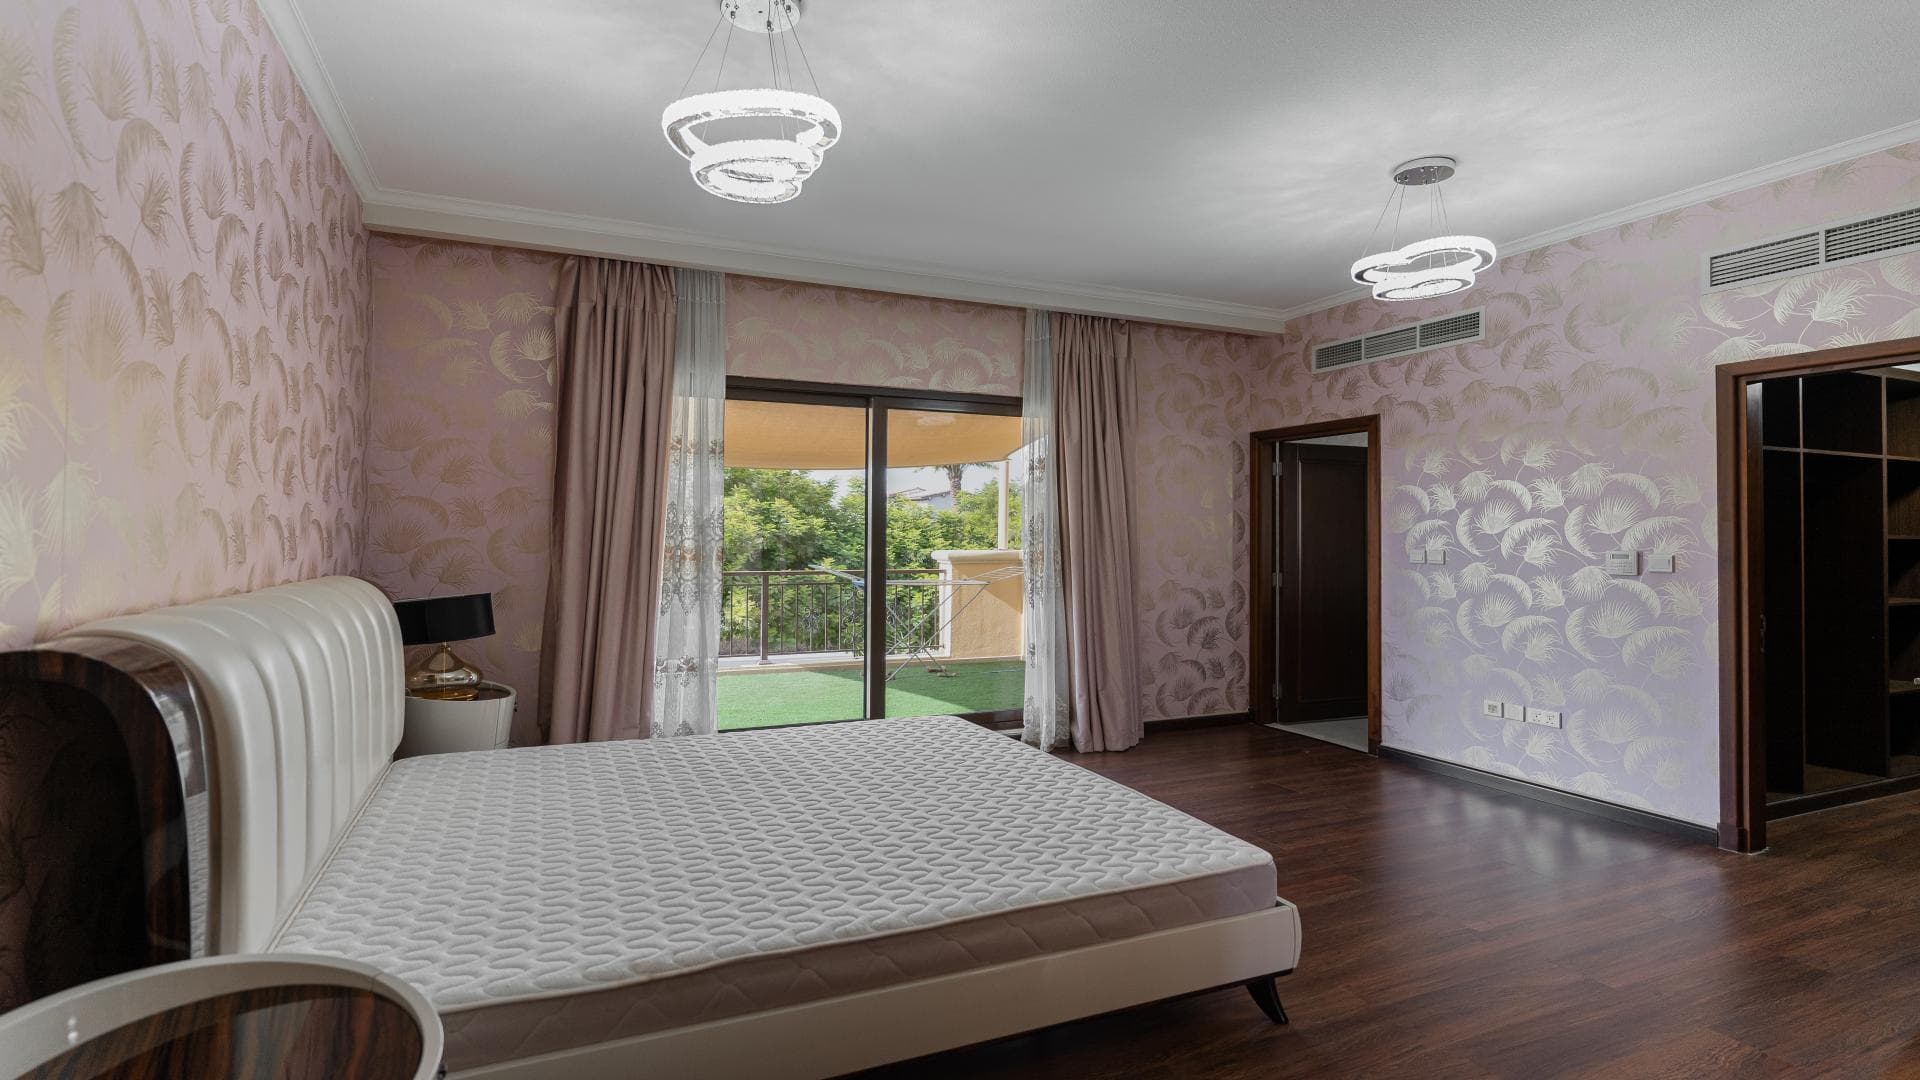 4 Bedroom Villa For Sale Lila Lp14445 7facfc5303a1c40.jpg